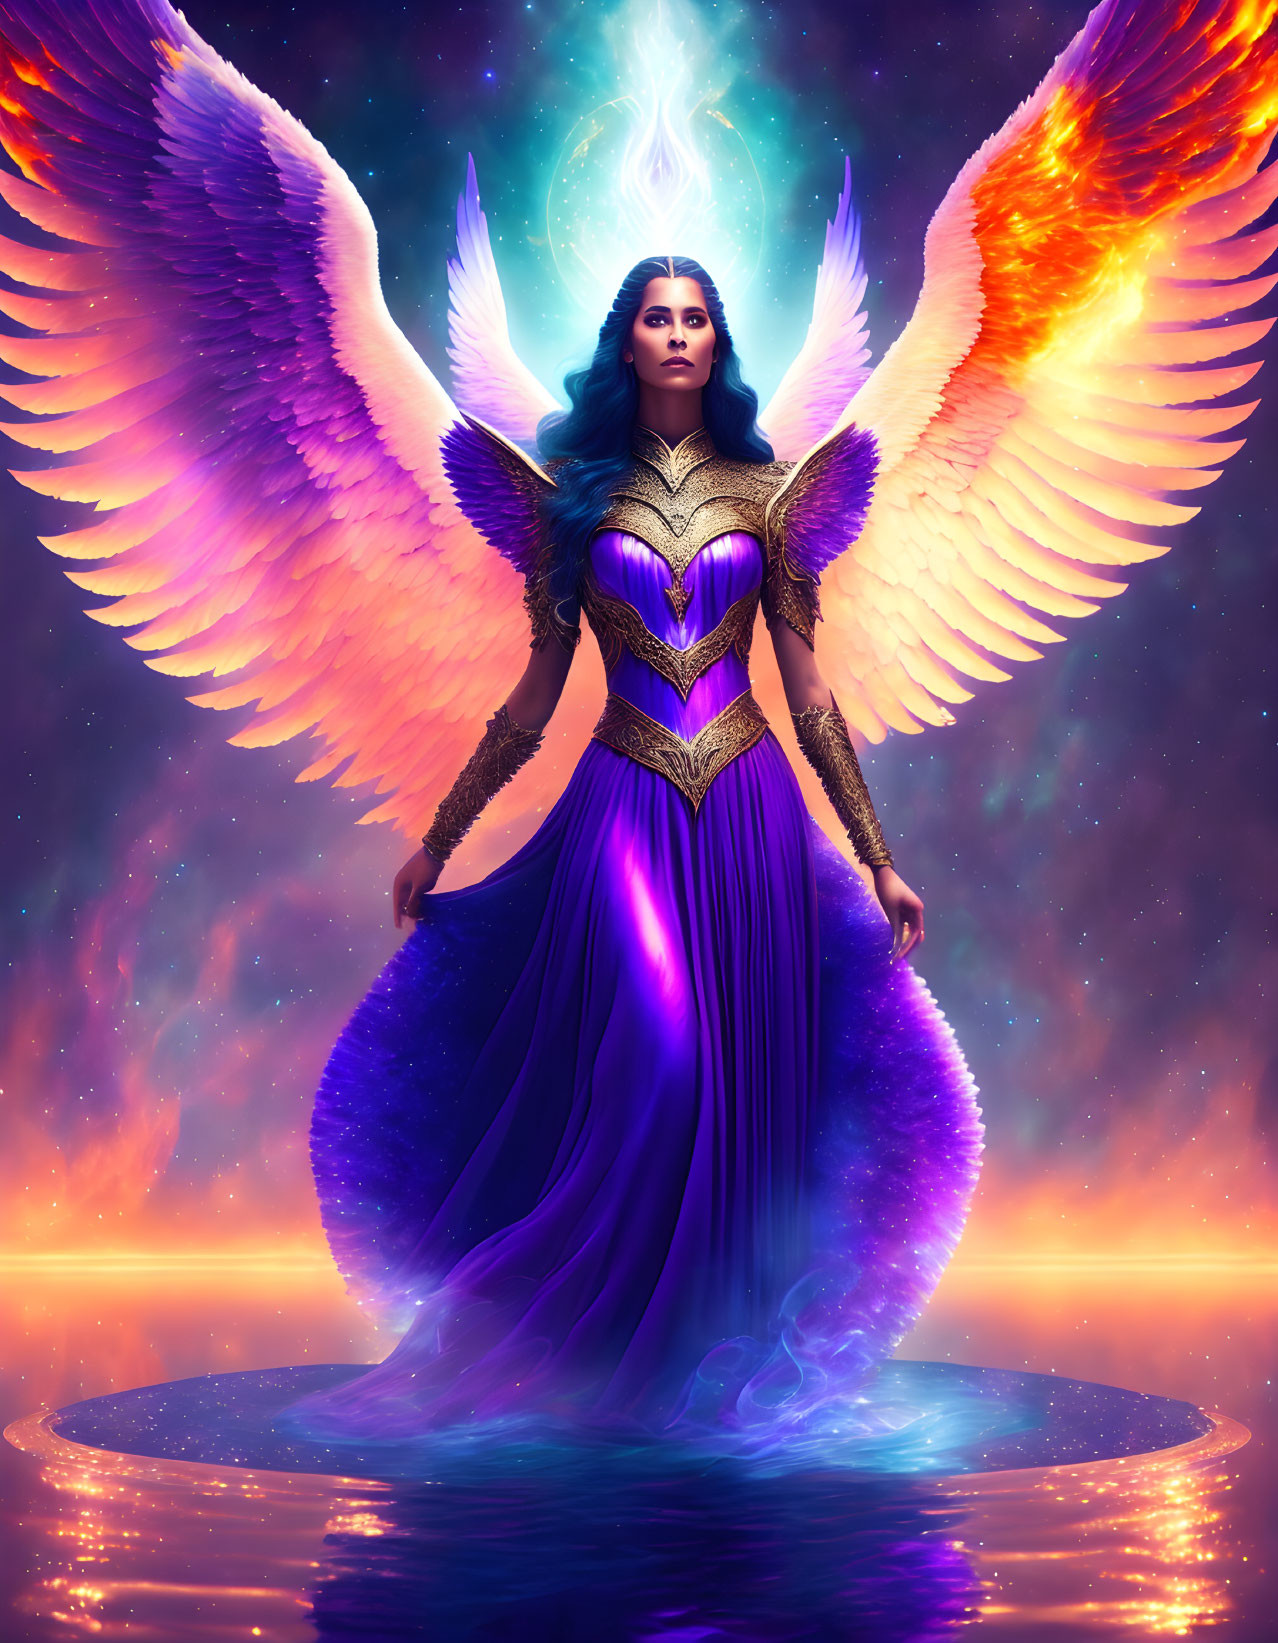 Luminous winged figure in cosmic setting emits mystical energy